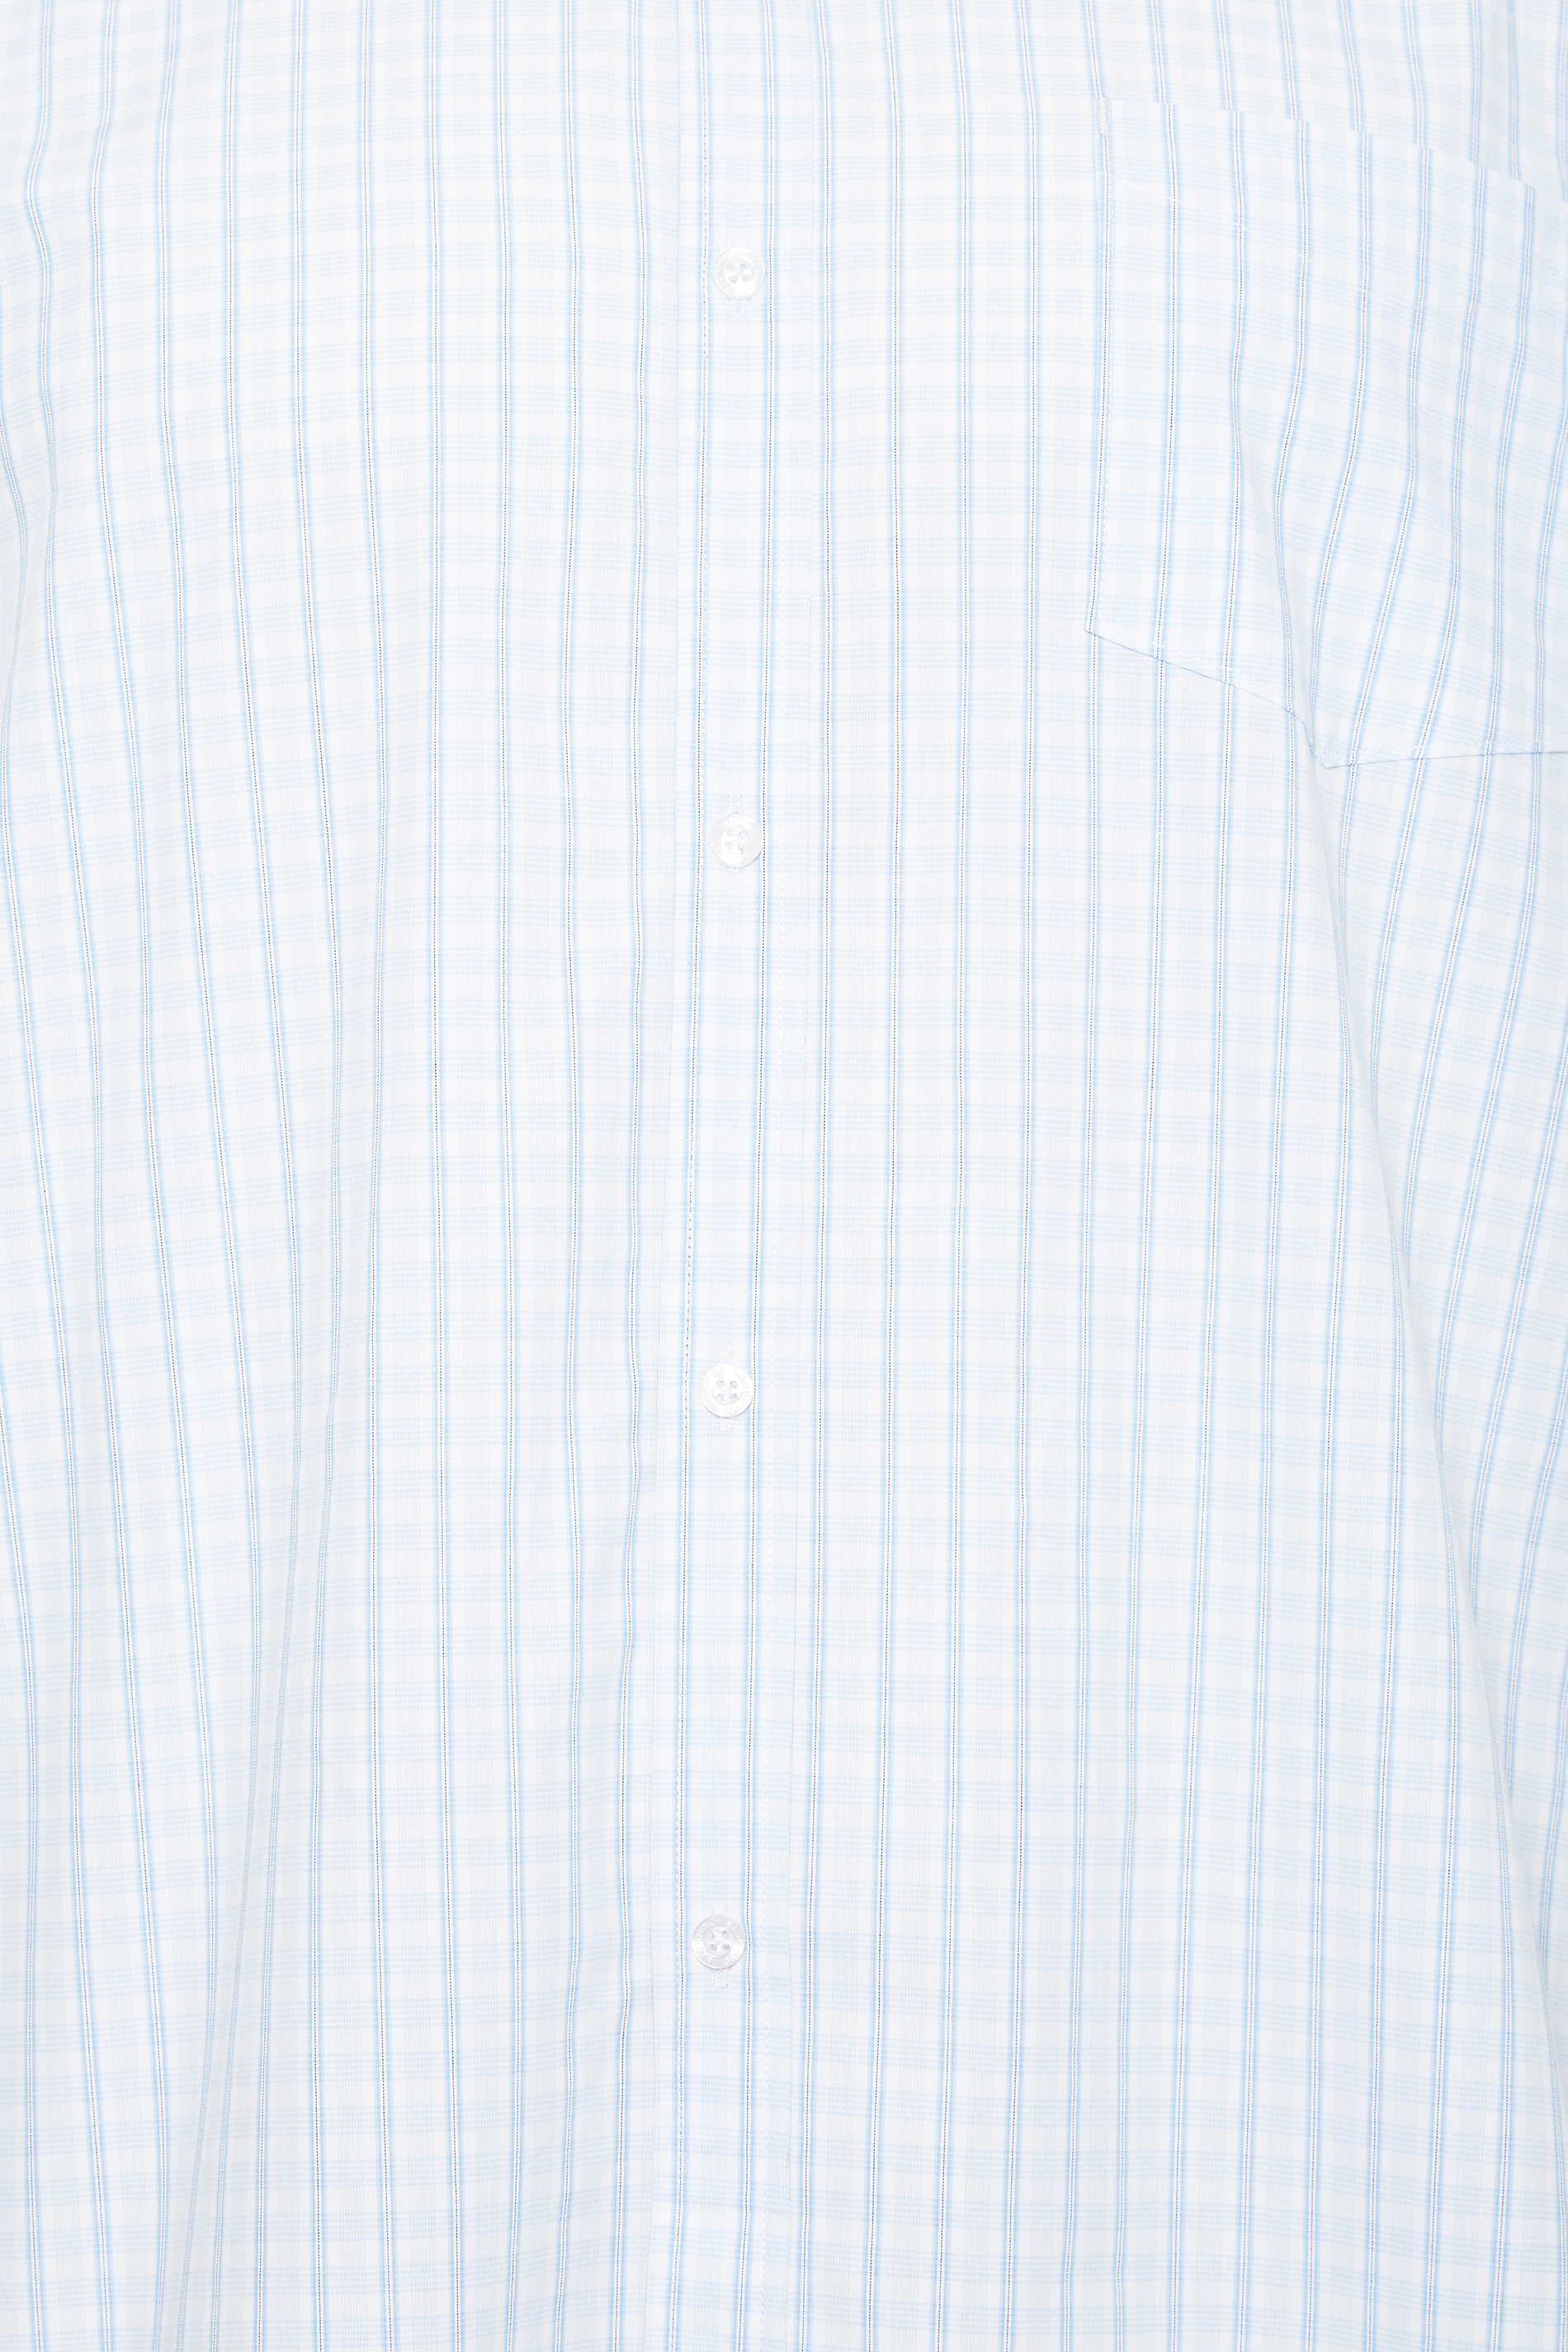 BadRhino Big & Tall Plus Size Light Blue Check Short Sleeve Shirt | BadRhino 2